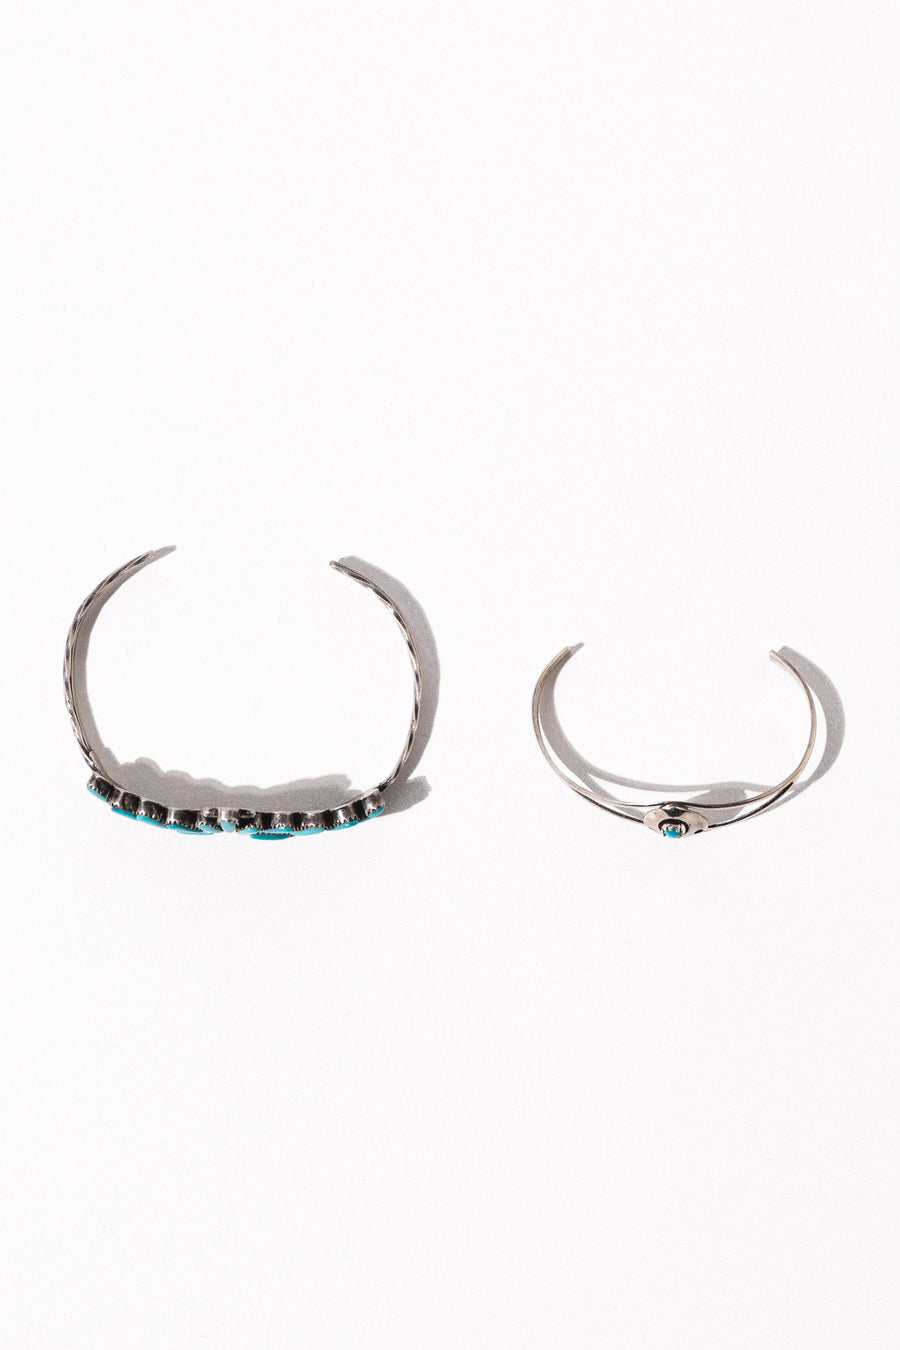 Sunwest Jewelry Silver / Turquoise Tarlo Native American Baby Cuff